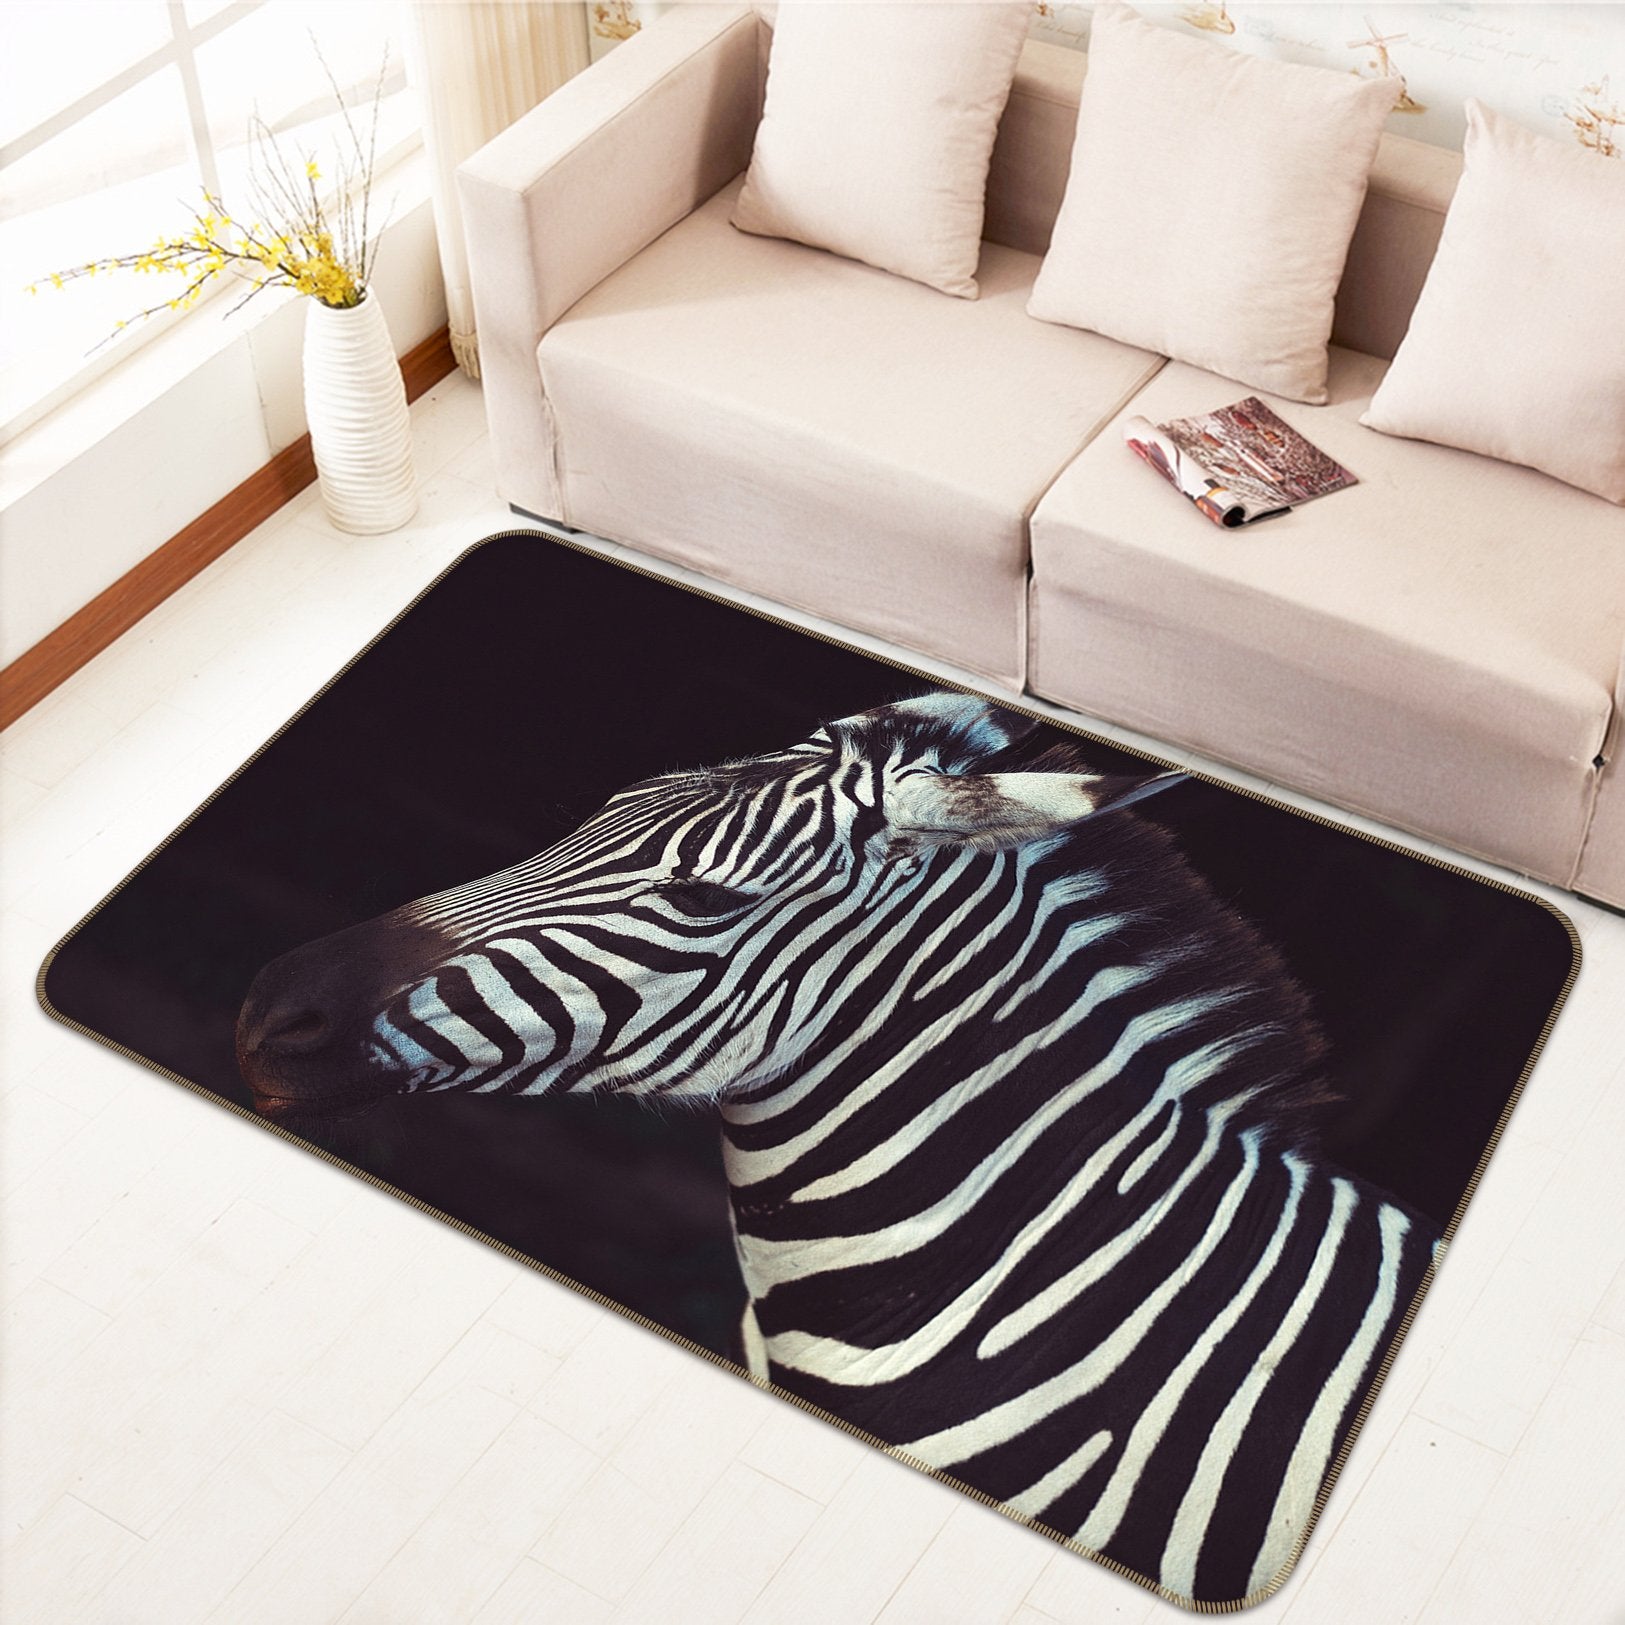 3D Zebra 553 Animal Non Slip Rug Mat Mat AJ Creativity Home 